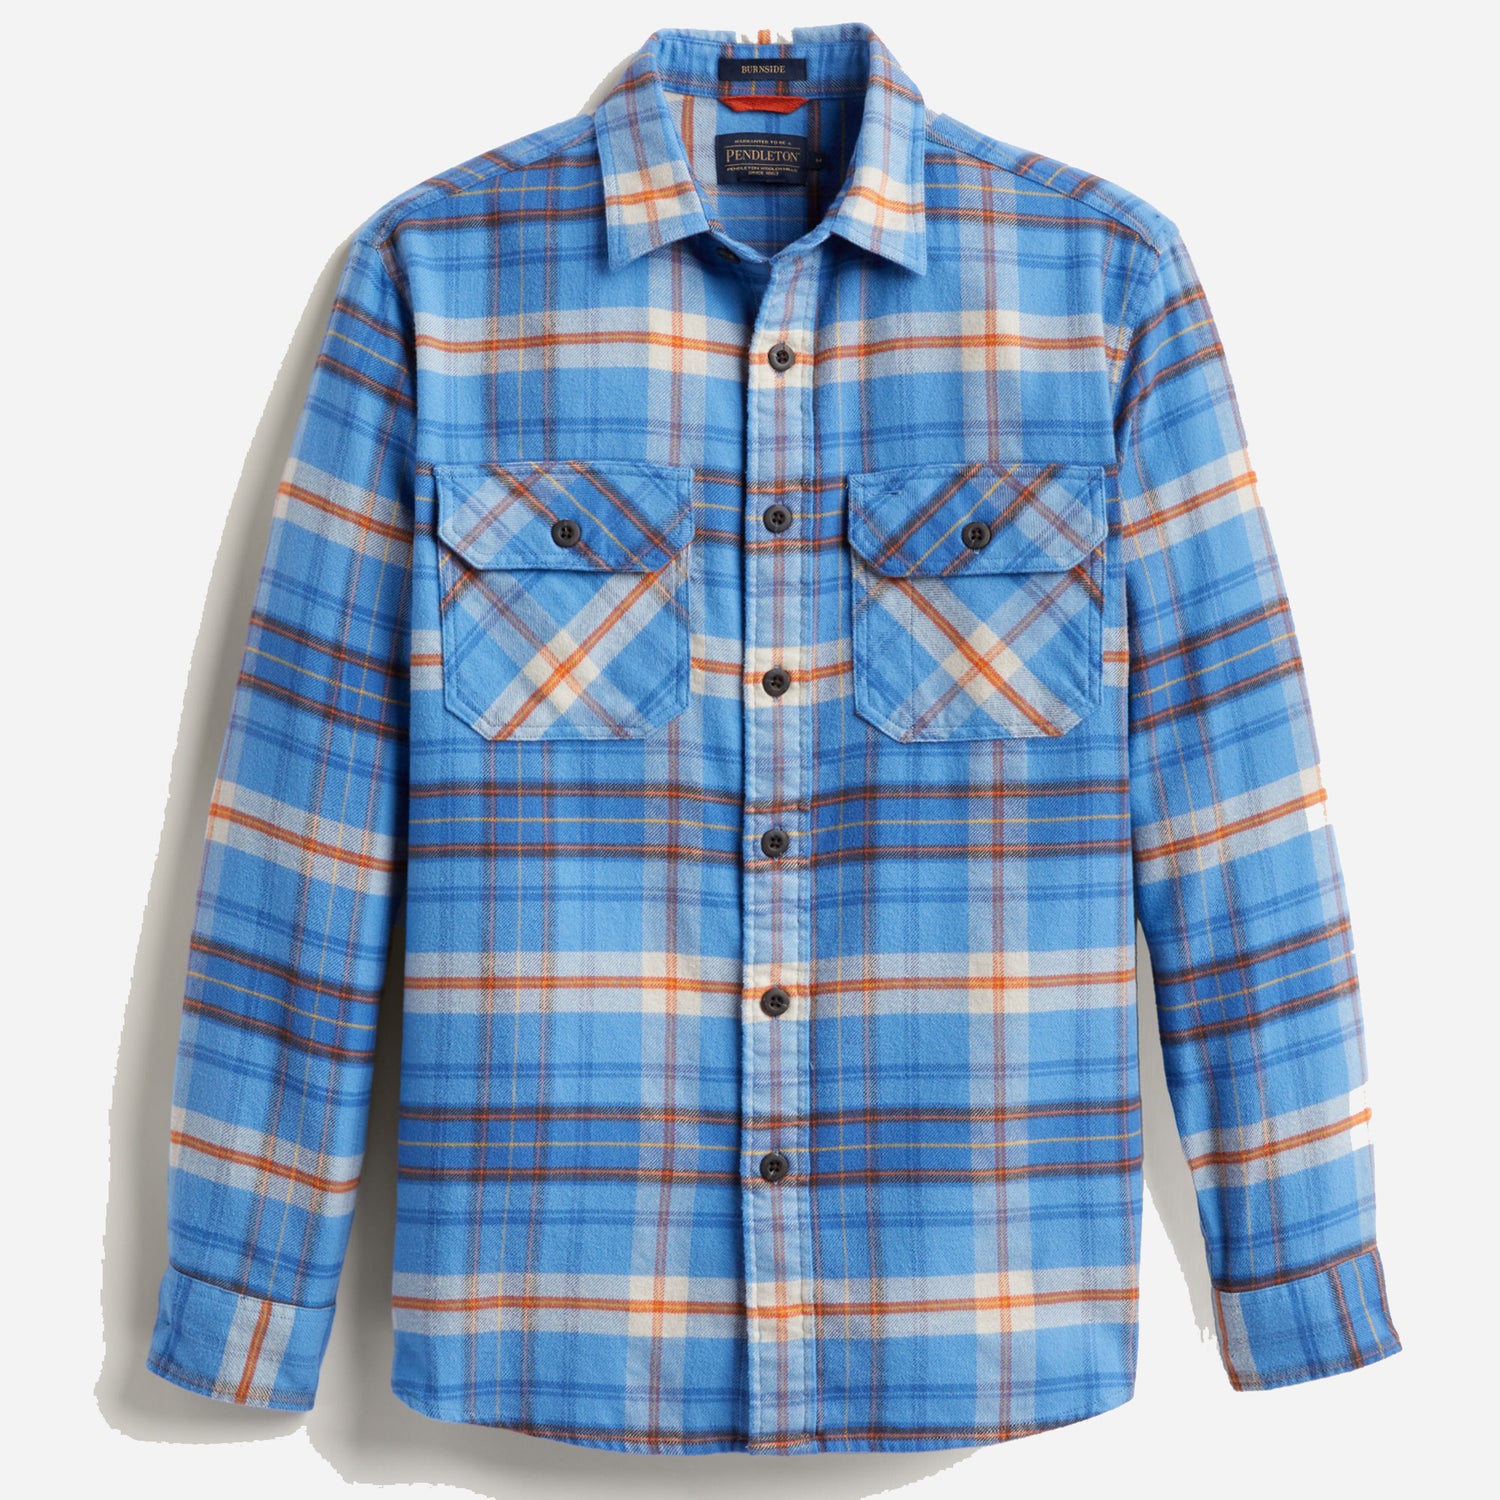 Burnside flannel shirt - Seaside blue/red plaid